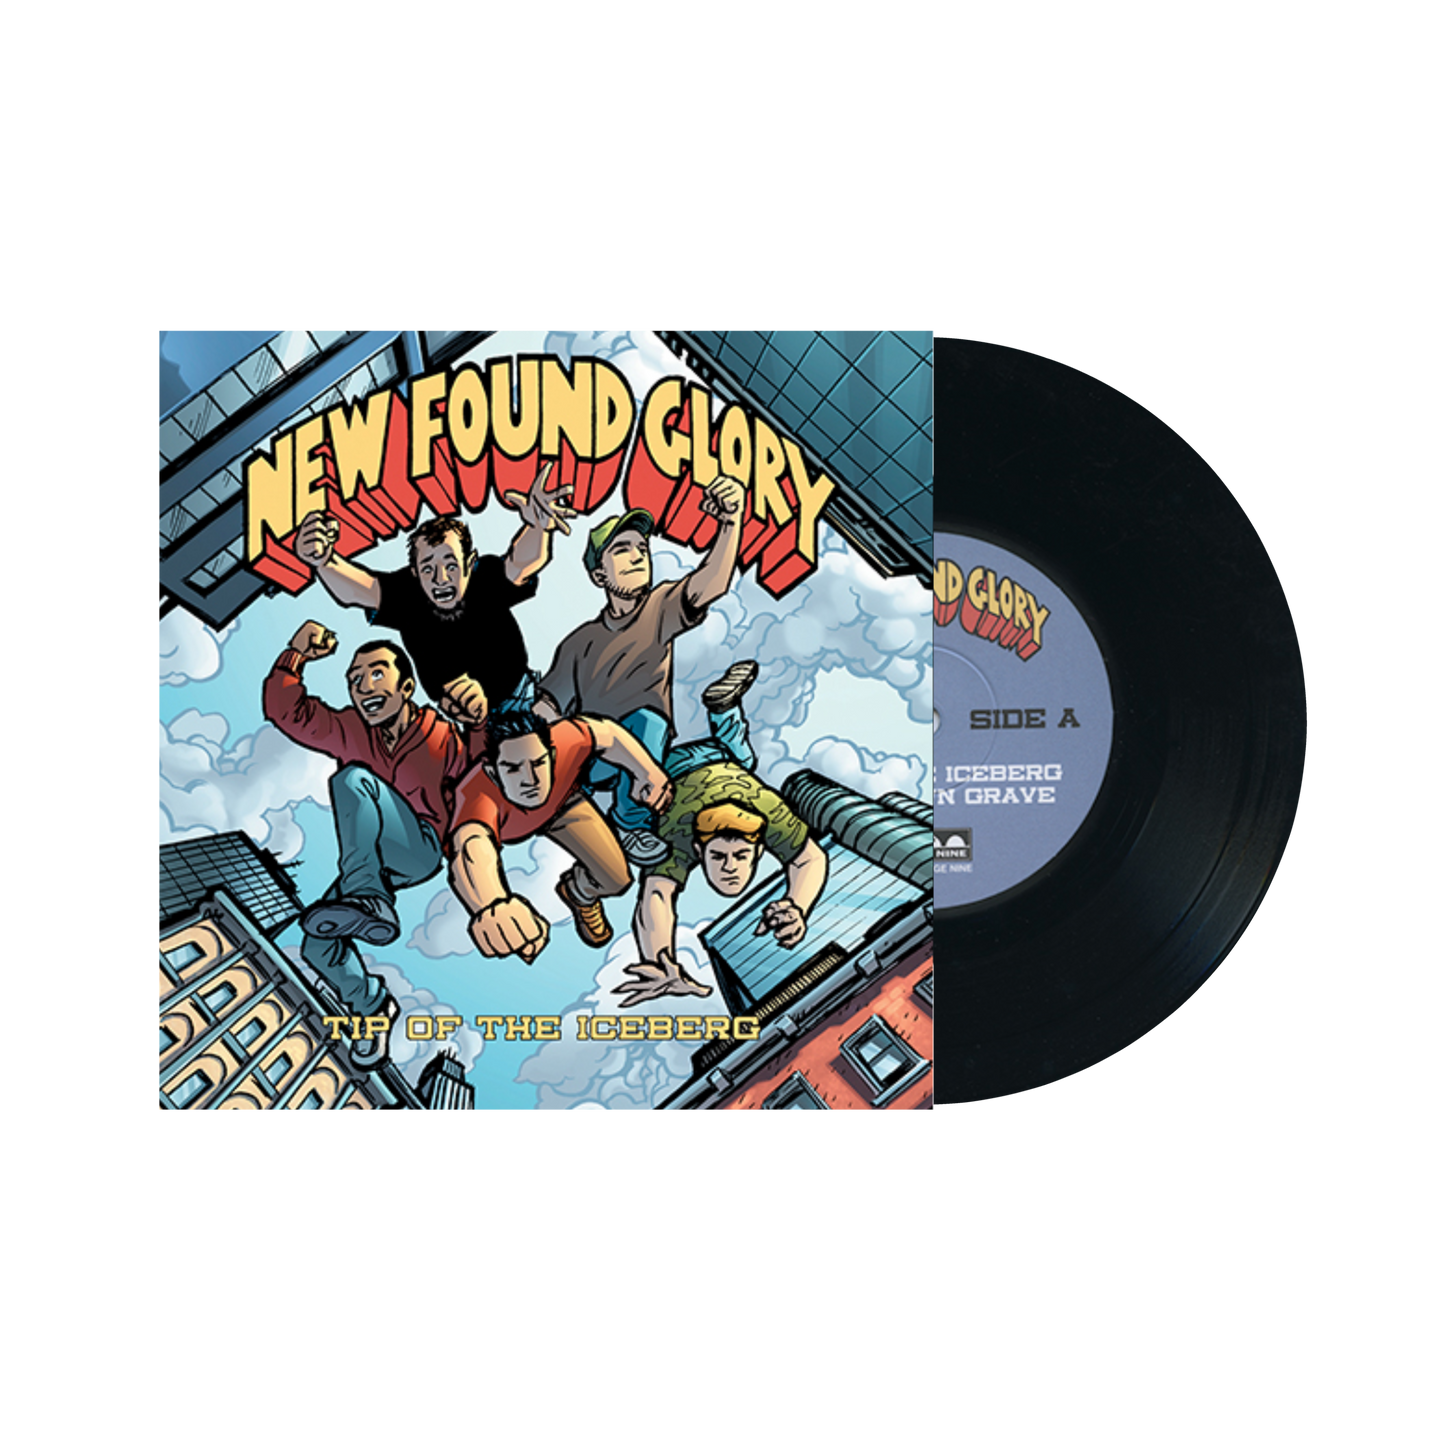 New Found Glory "Tip Of The Iceberg" 7"